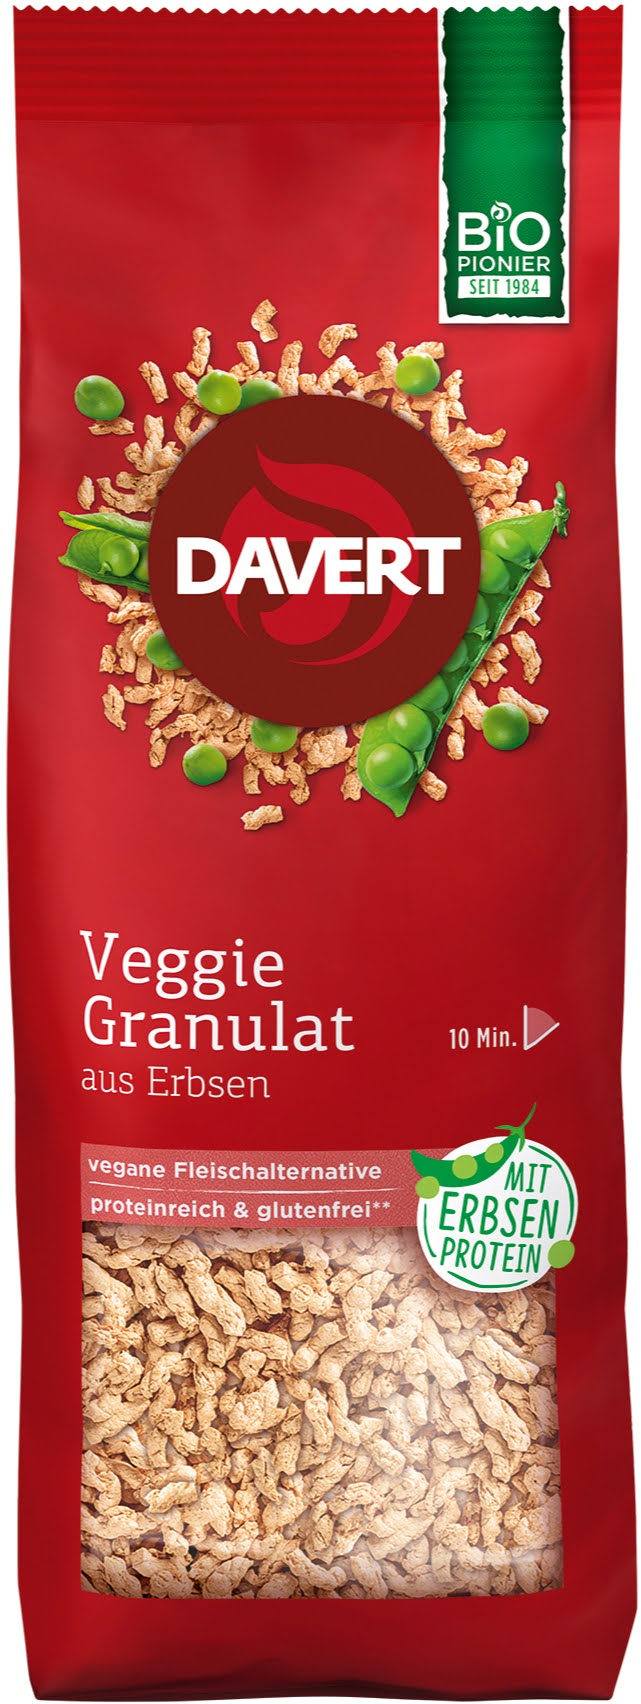 Veggie Granulat (aus Erbsen)